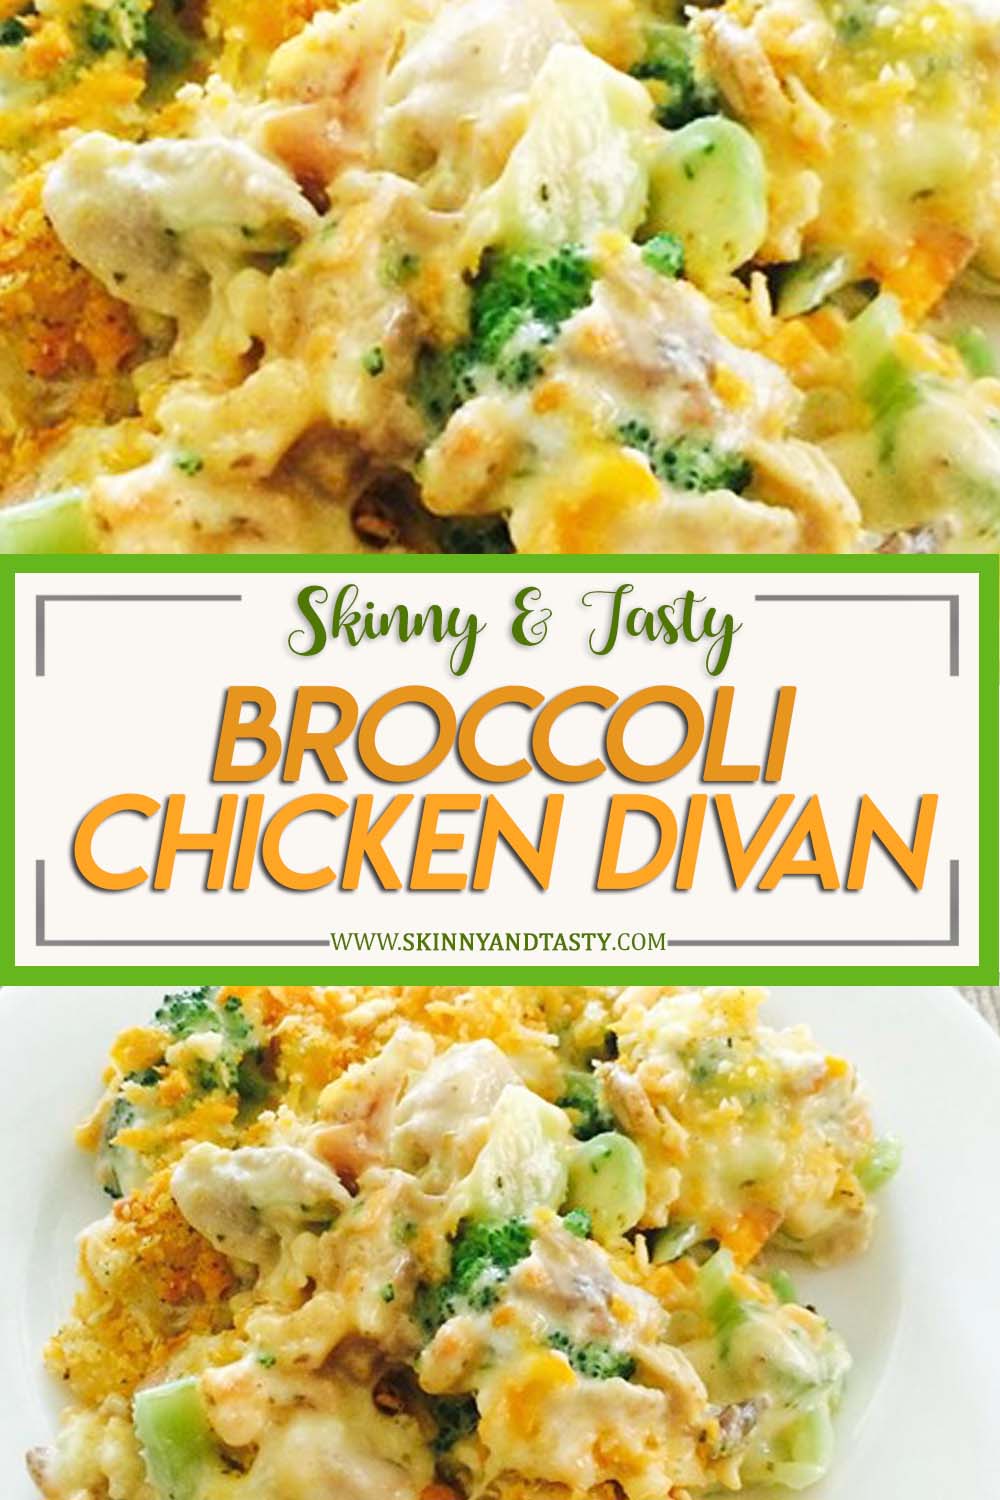 Broccoli Chicken Divan